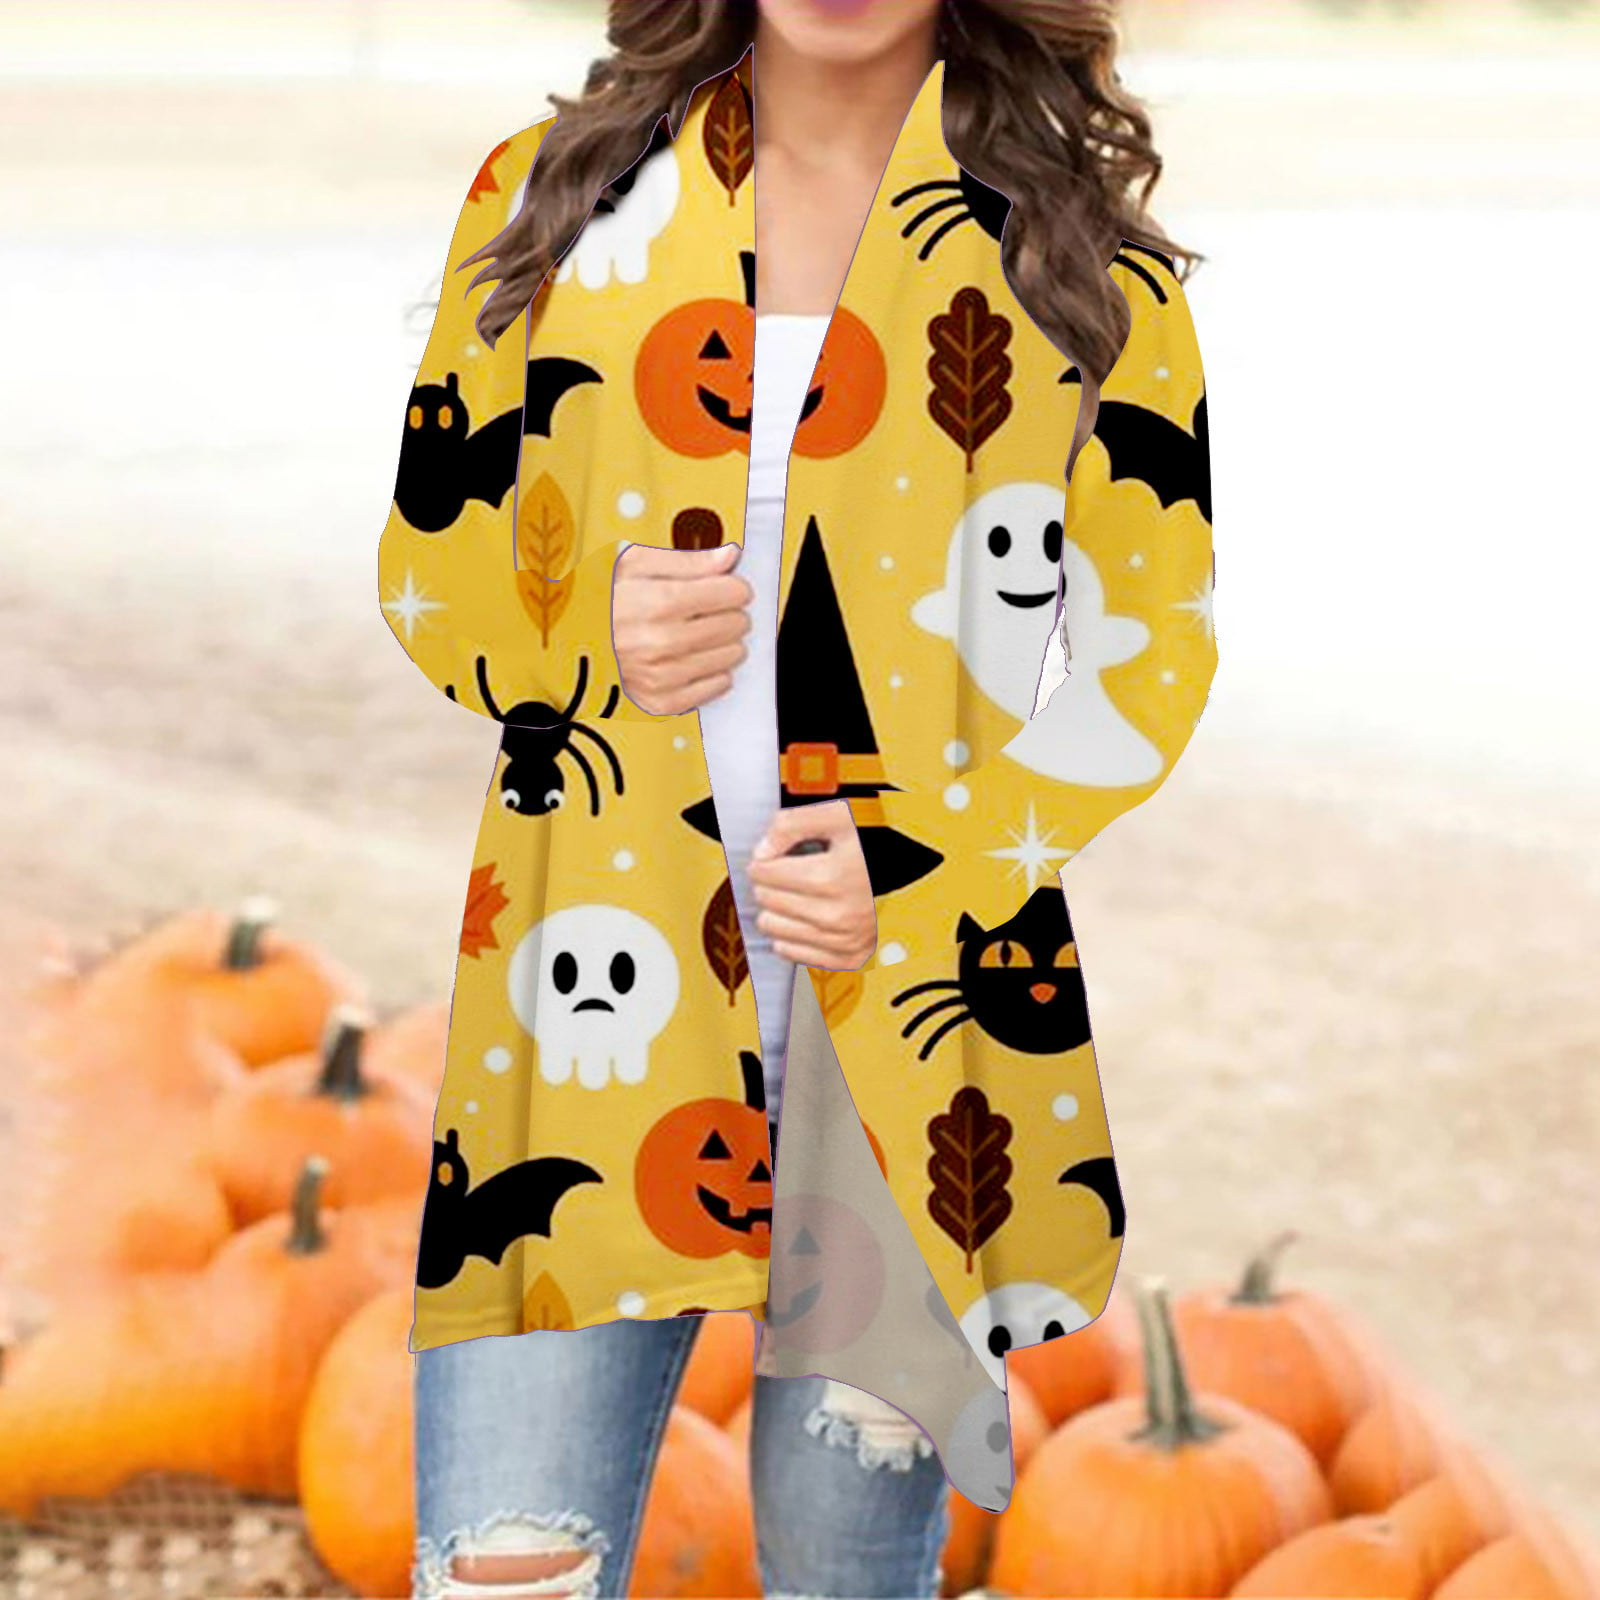 Halloween Women/'s Cardigan Long Sleeve Draped Sweater Blouse Pumpkin Print Tops